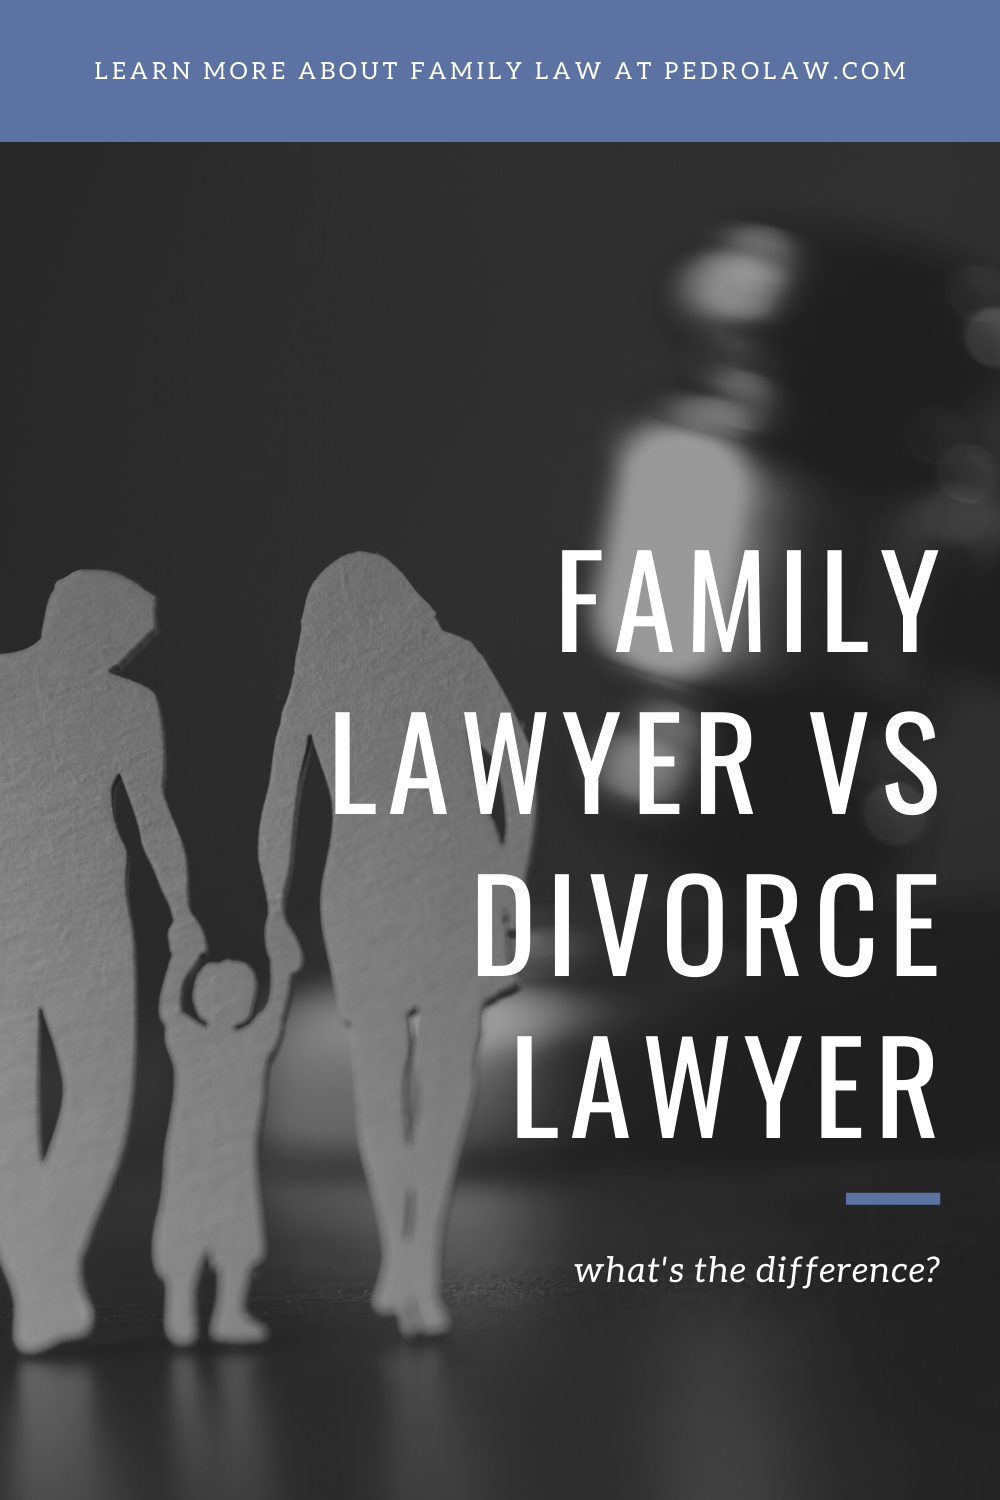 divorce lawyer vs family lawyer